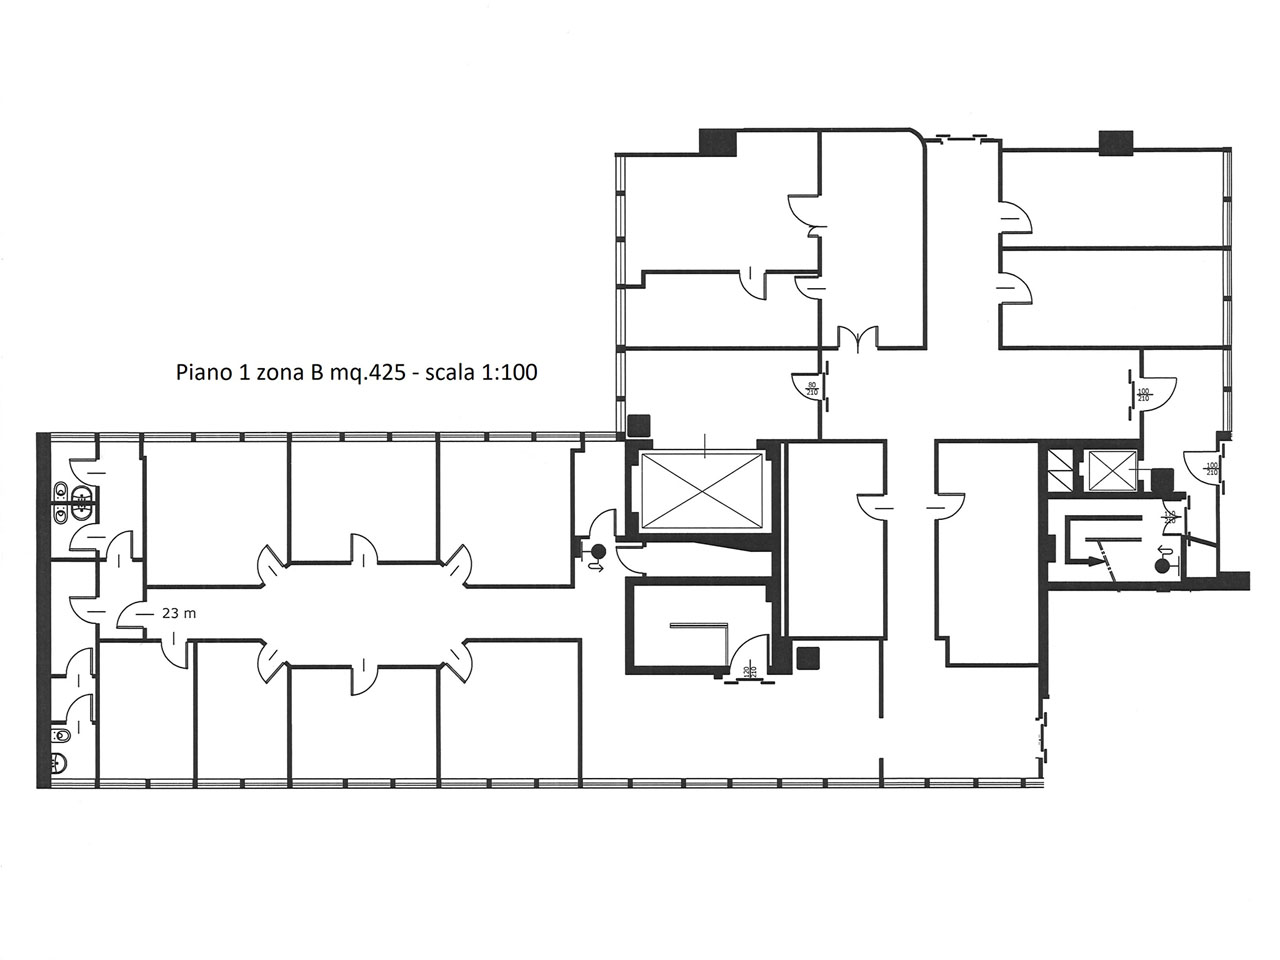 Floorplan - Office to rent in Milan - 425 mq (4575 sqft) - via Fantoli 7 Mecenate area